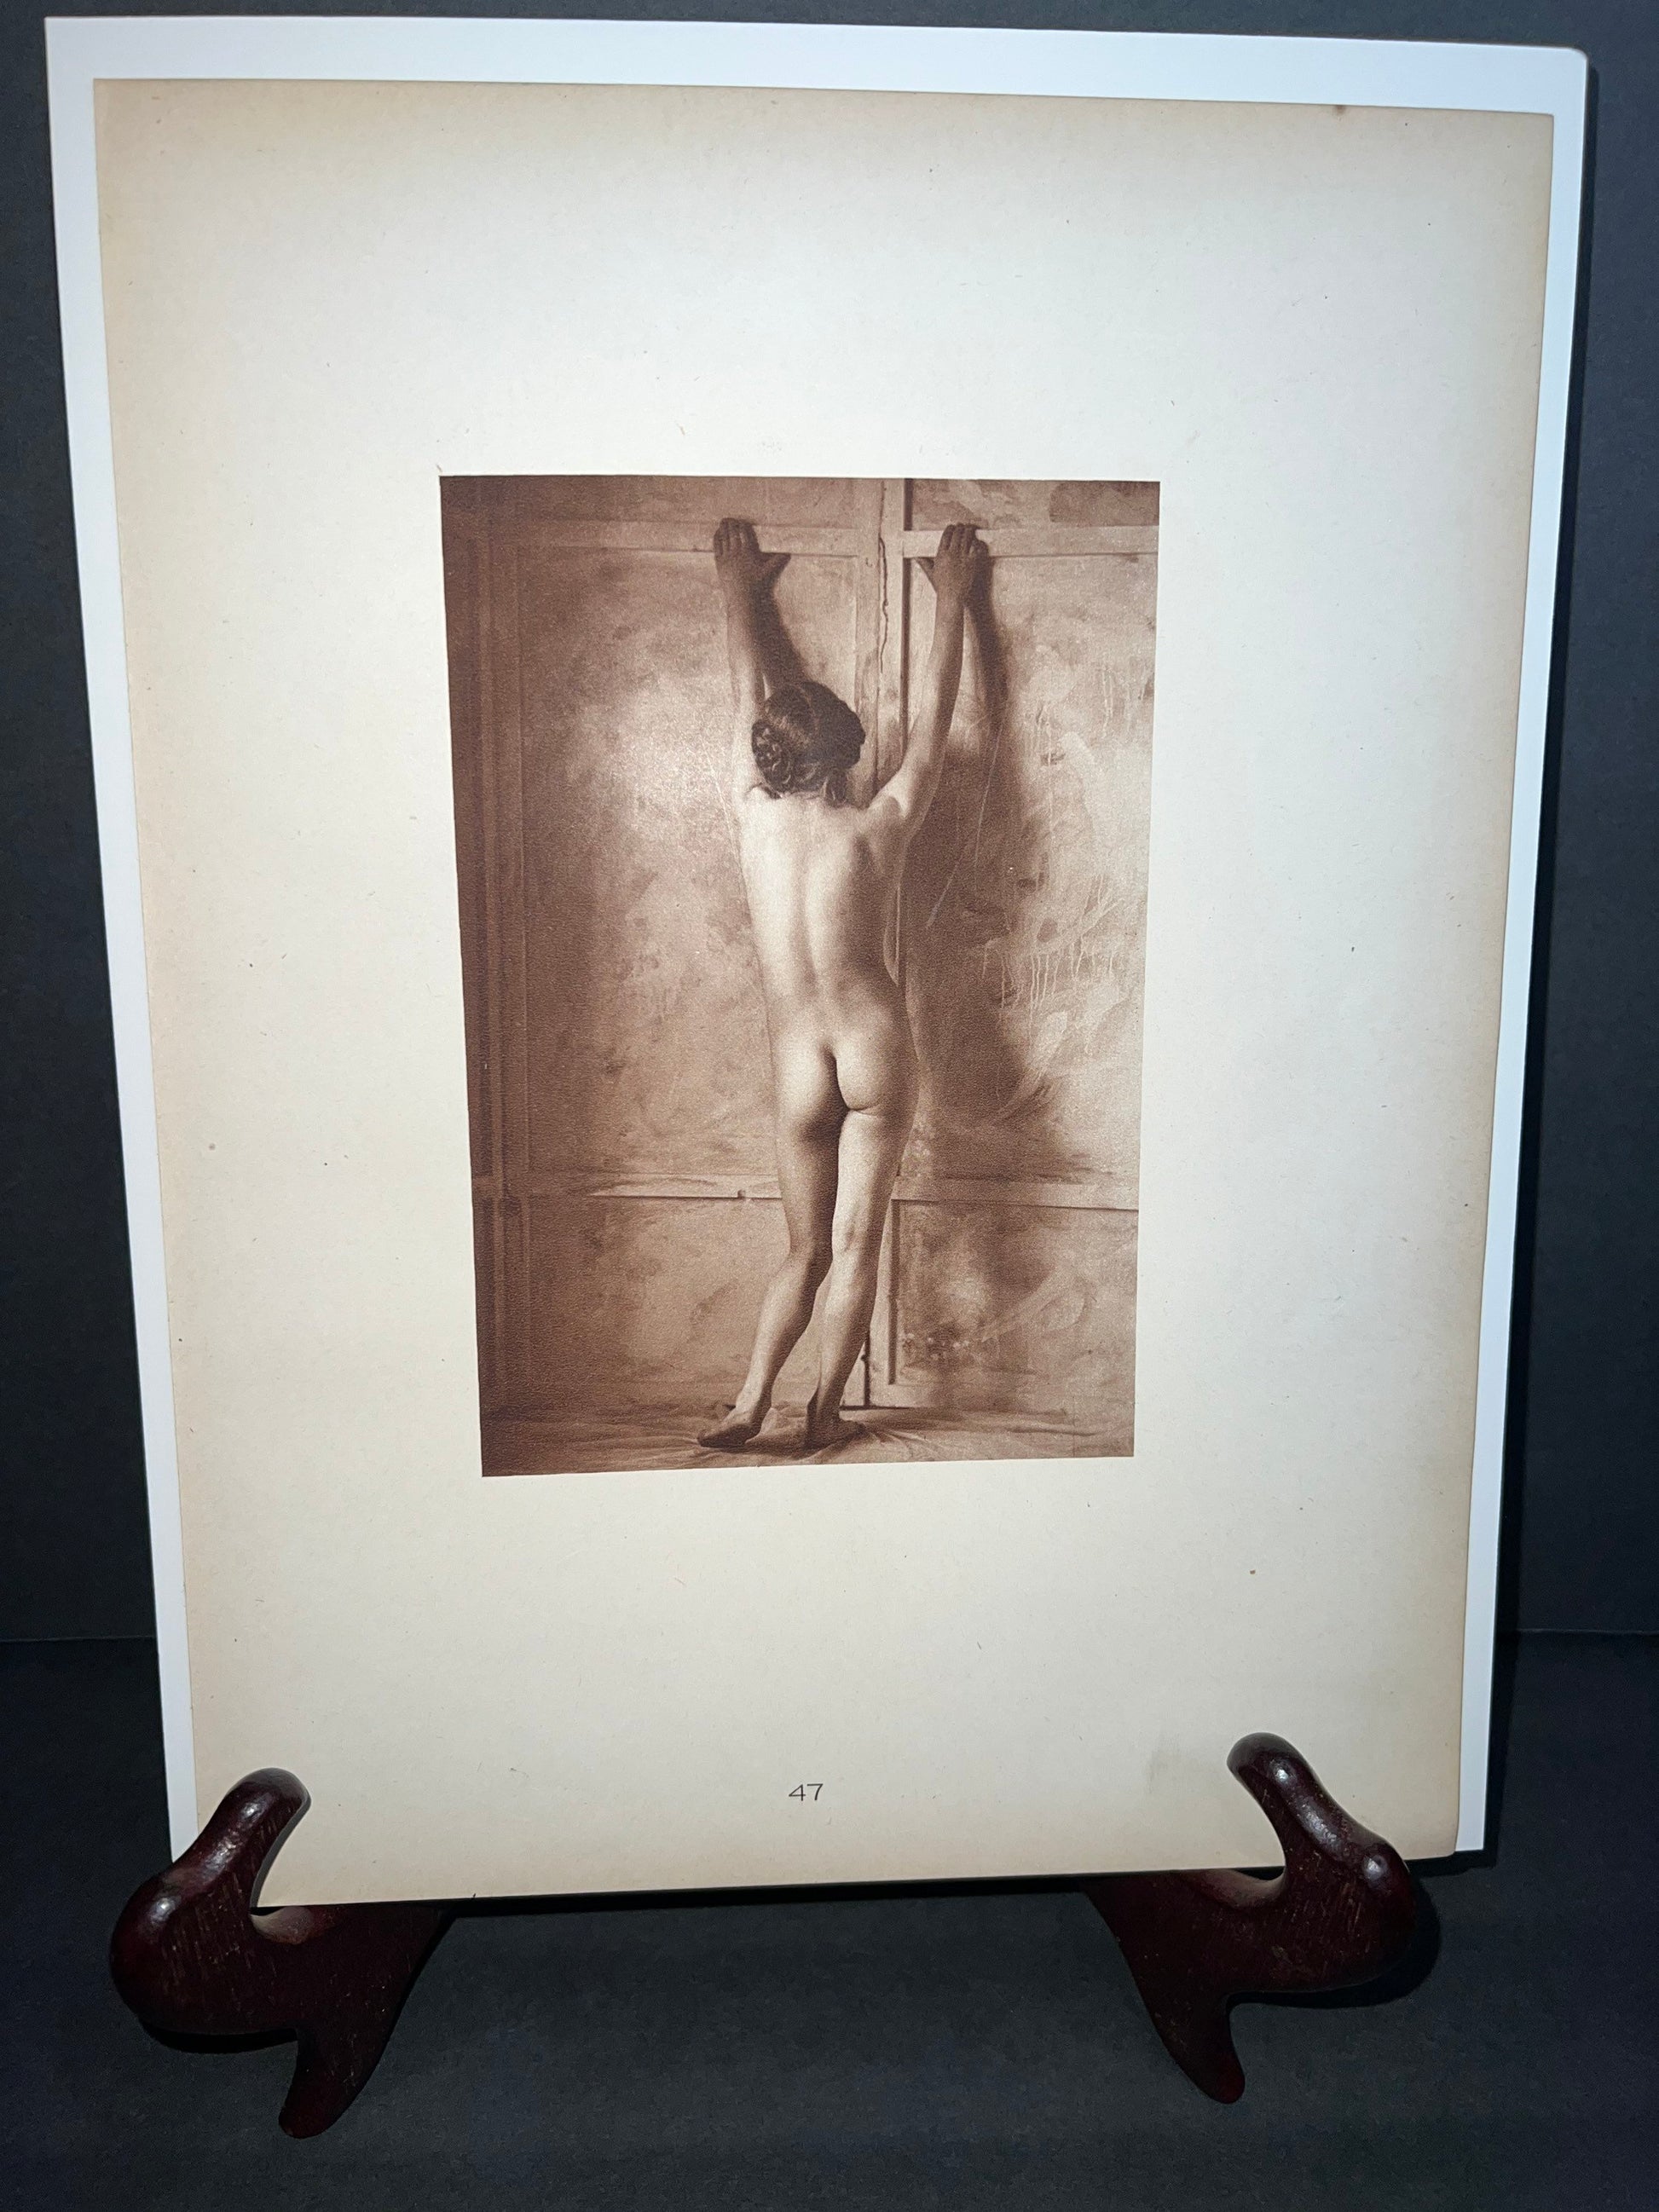 Antique Art Deco nude woman posing photogravure 1930s pinup girl